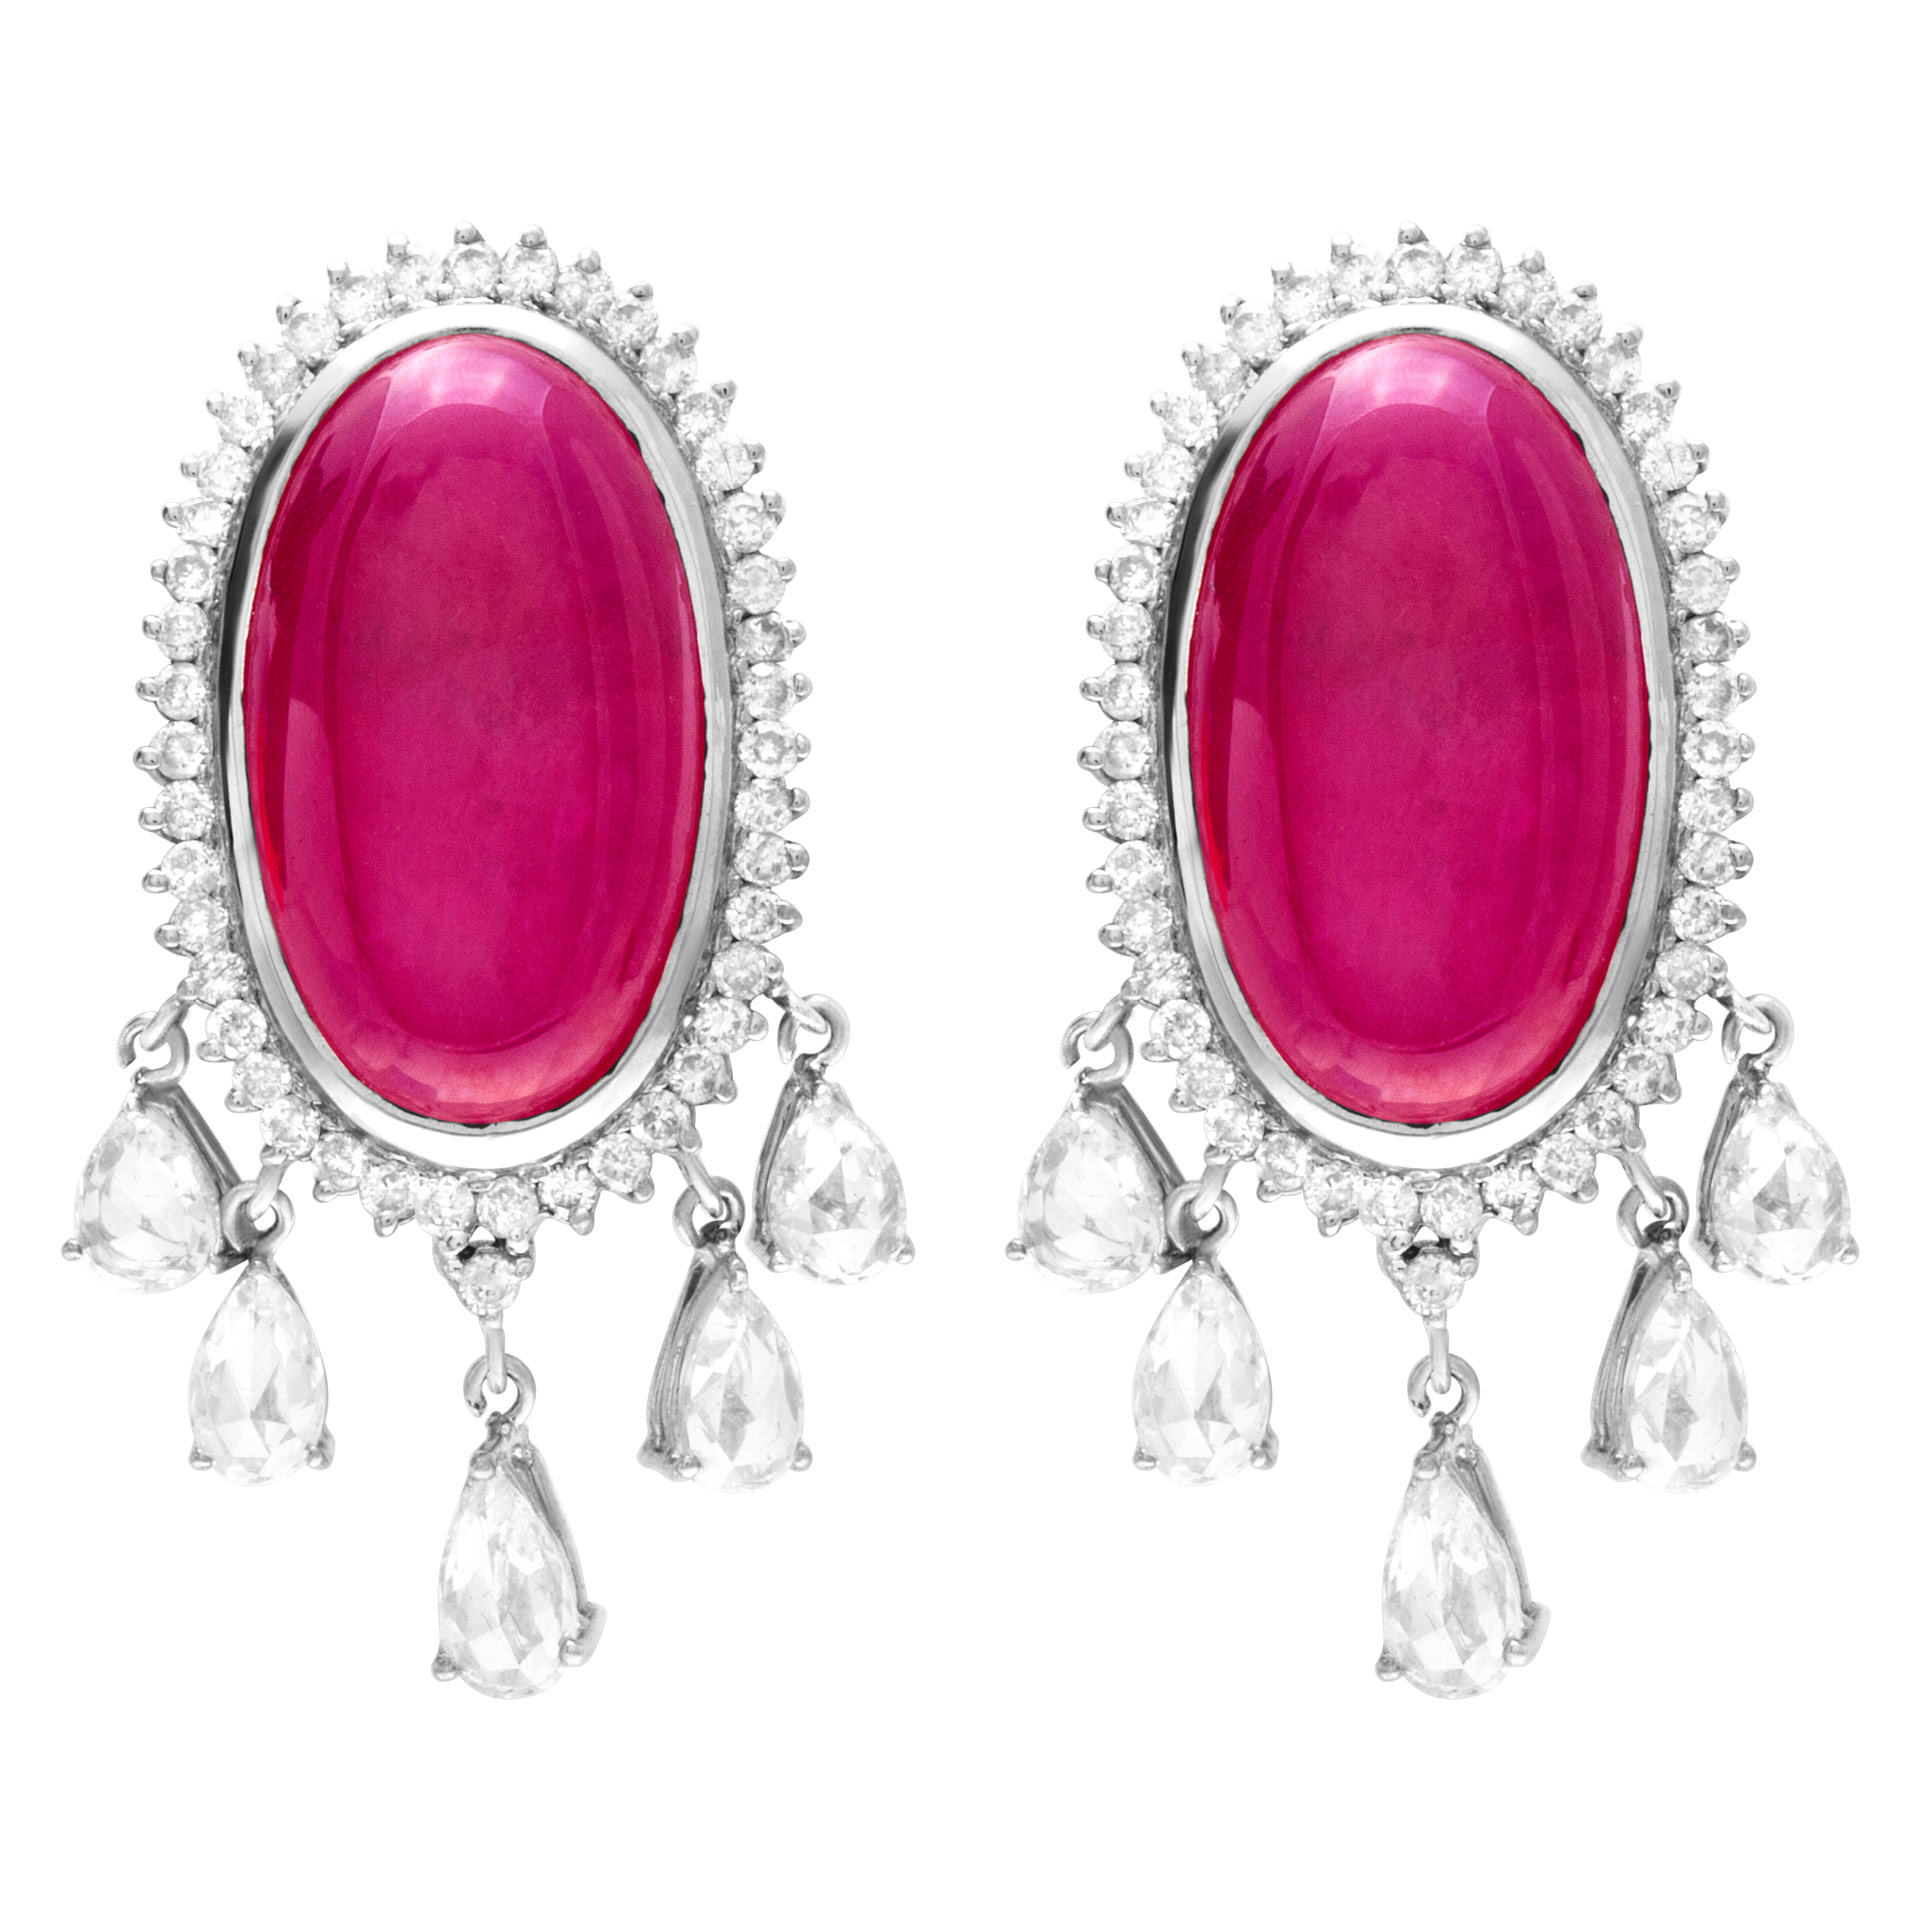 Ruby & diamond earrings set in 18k white gold